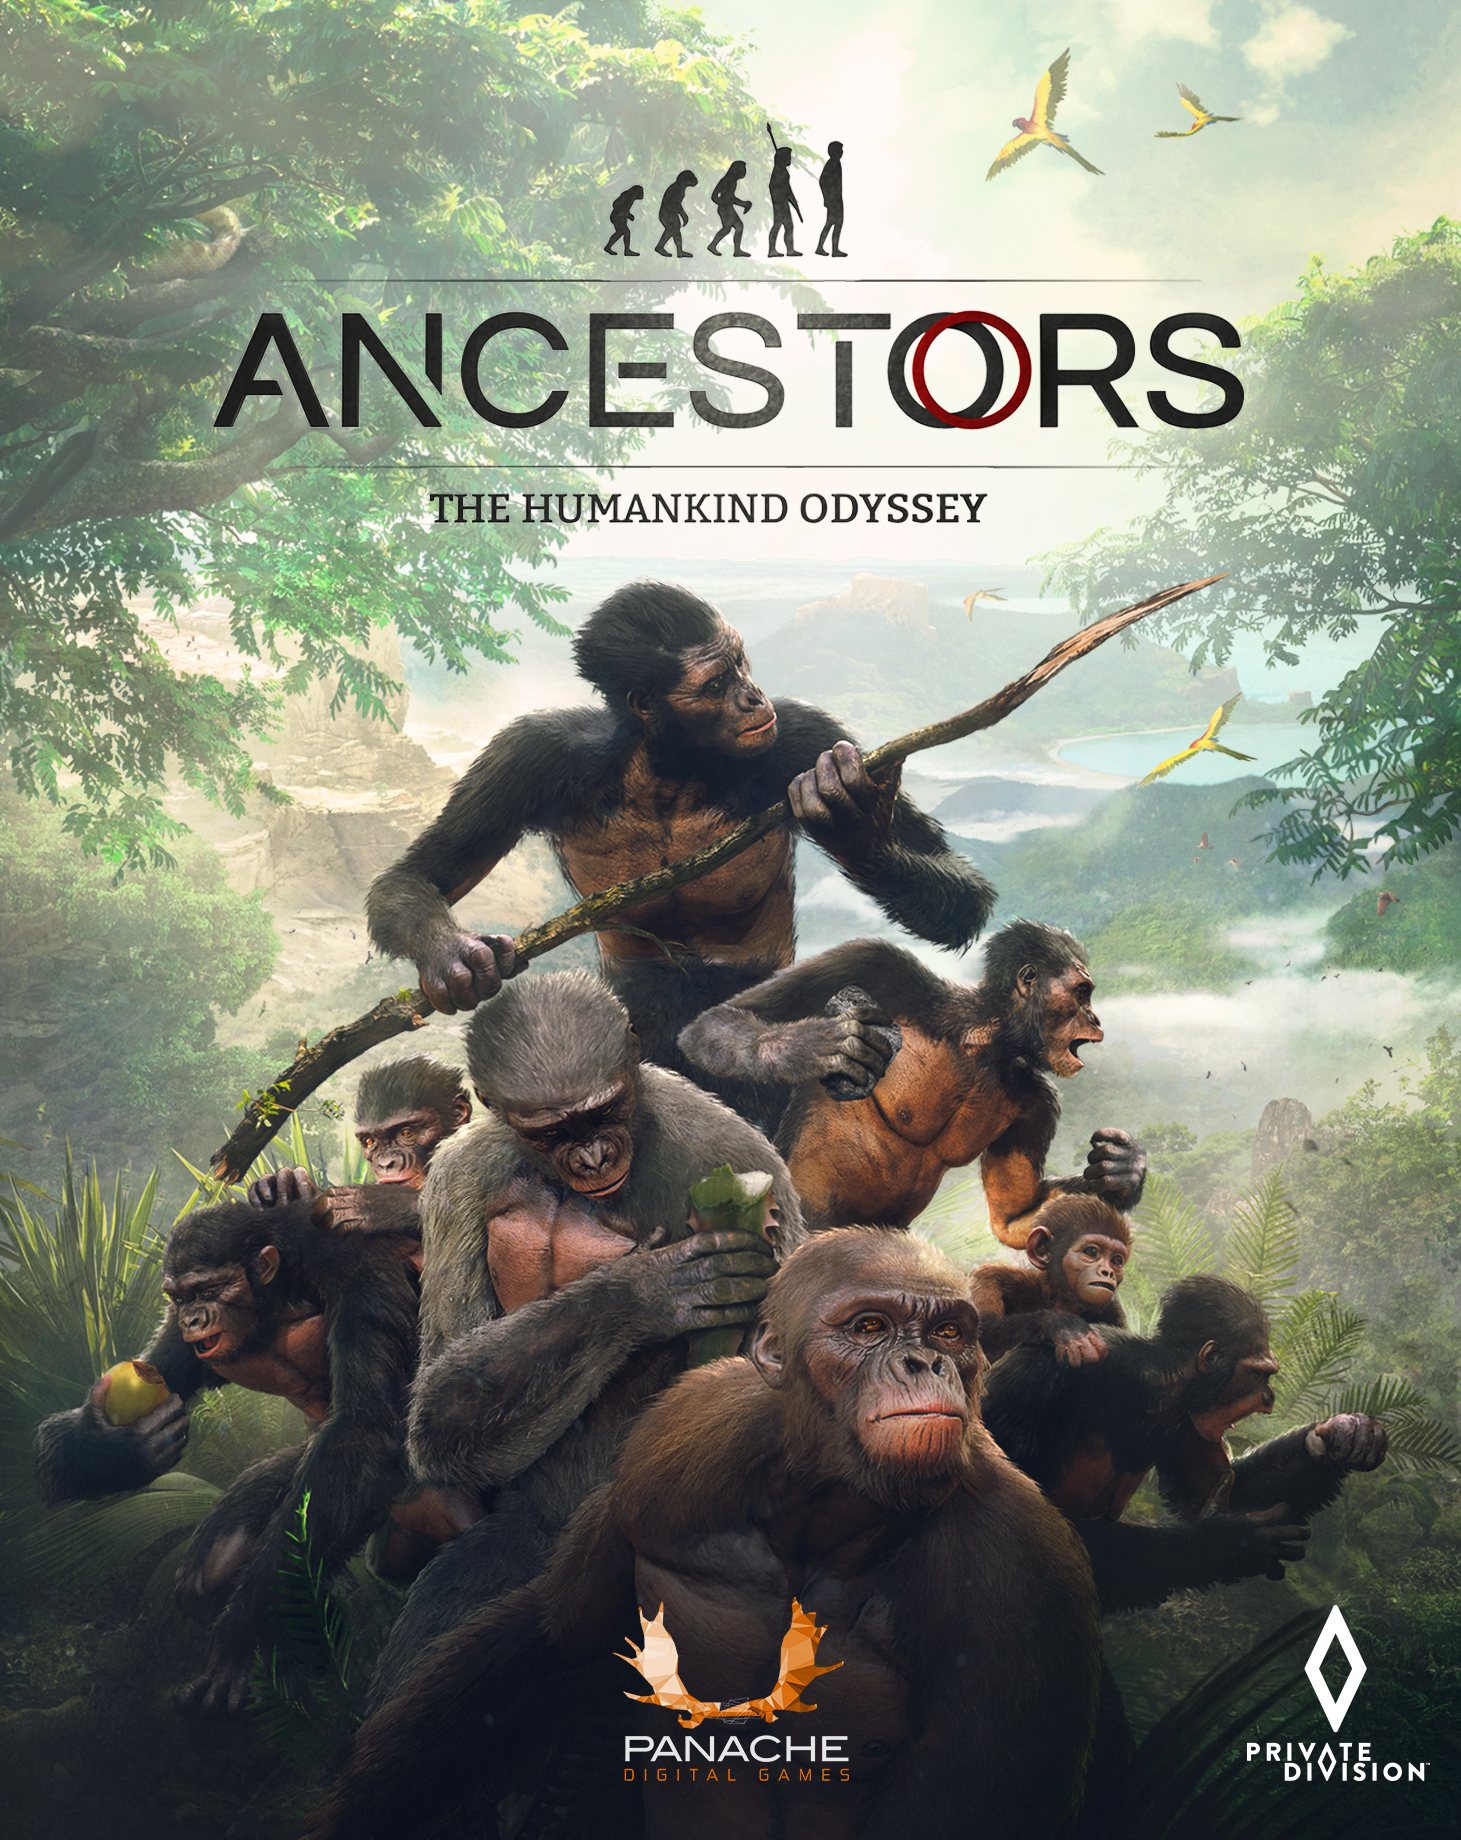 Ancestors: The Humankind Odyssey (Steam)